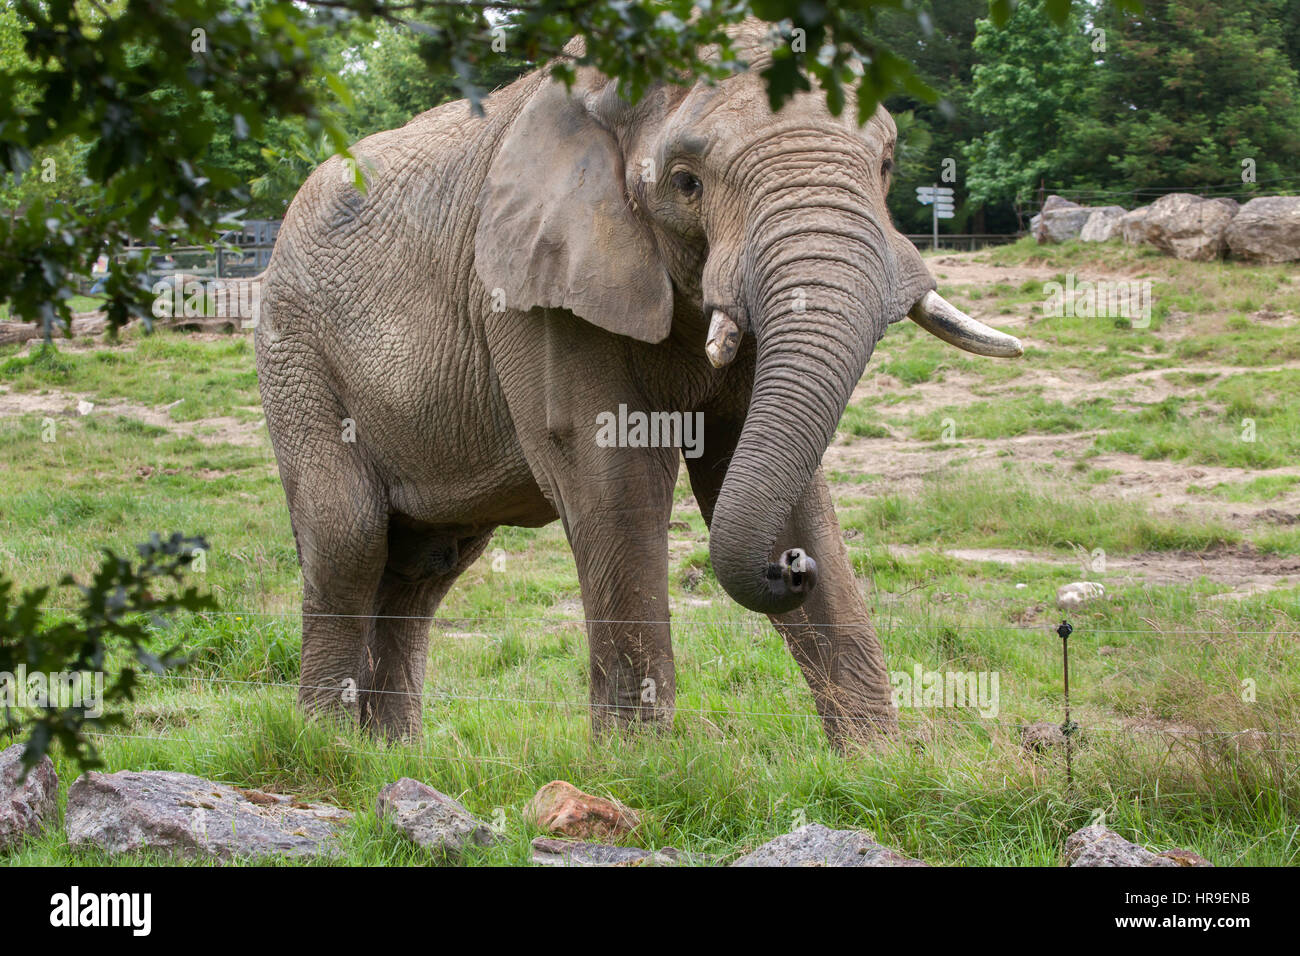 African bush elephant (Loxodonta africana) at Beauval Zoo in Saint-Aignan sur Cher, Loir-et-Cher, France. Stock Photo